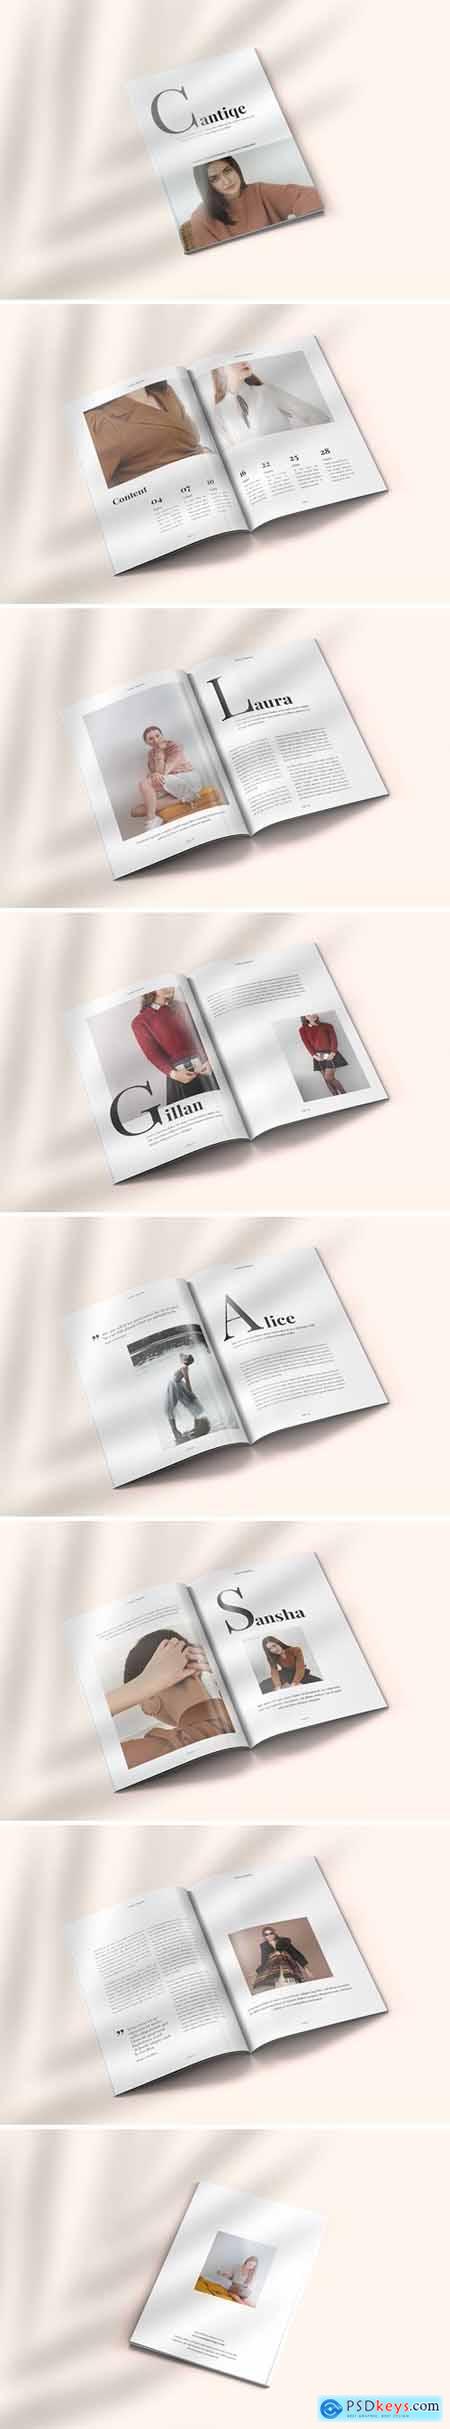 Cantiqe - Magazine Template Indesign